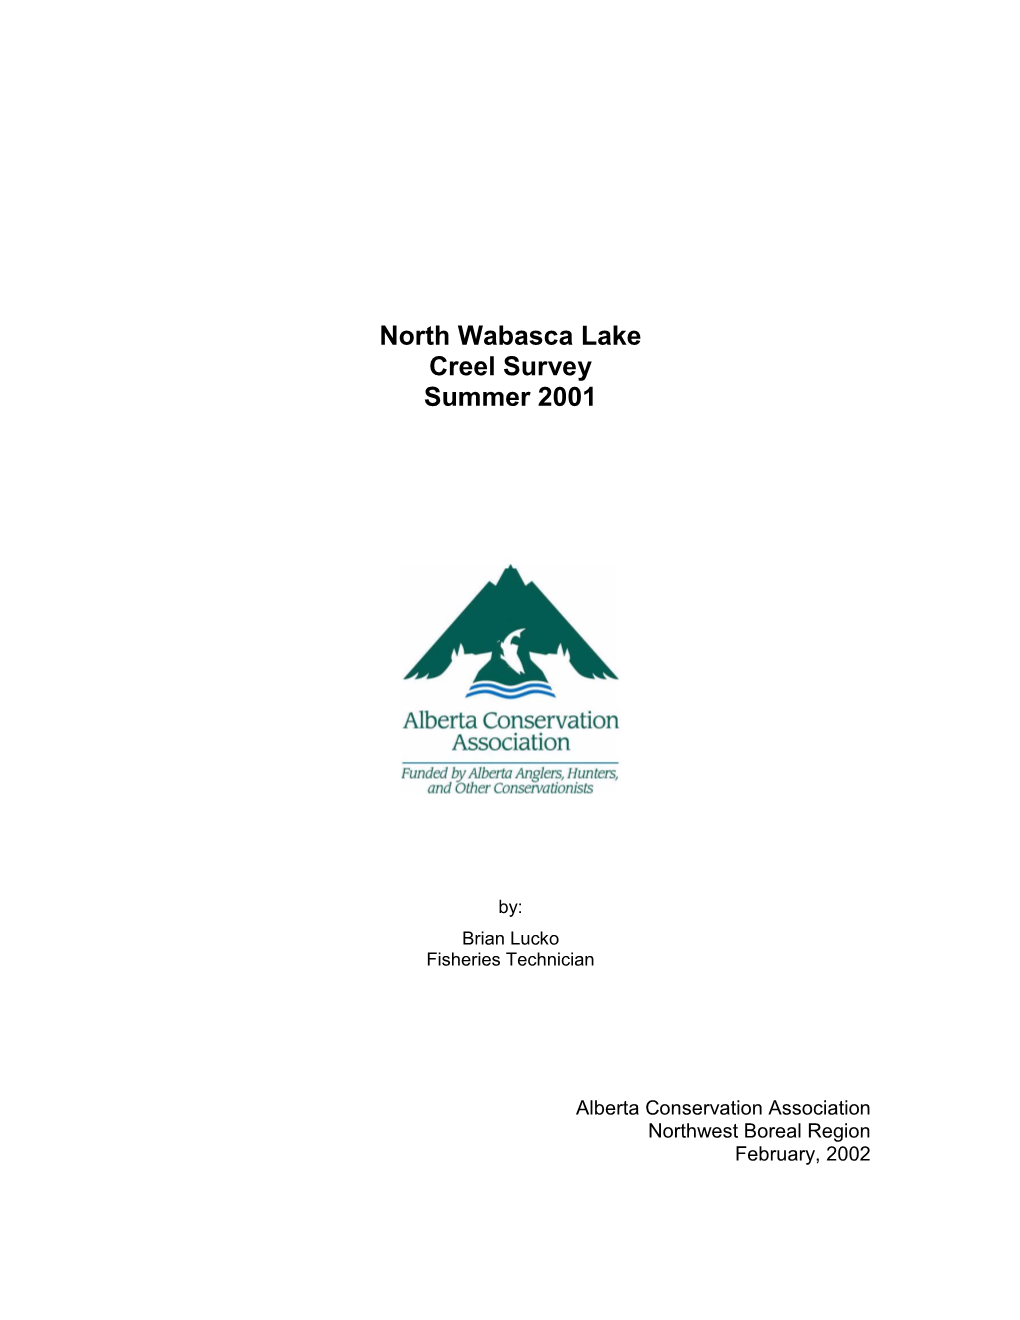 North Wabasca Lake Creel Survey Summer 2001